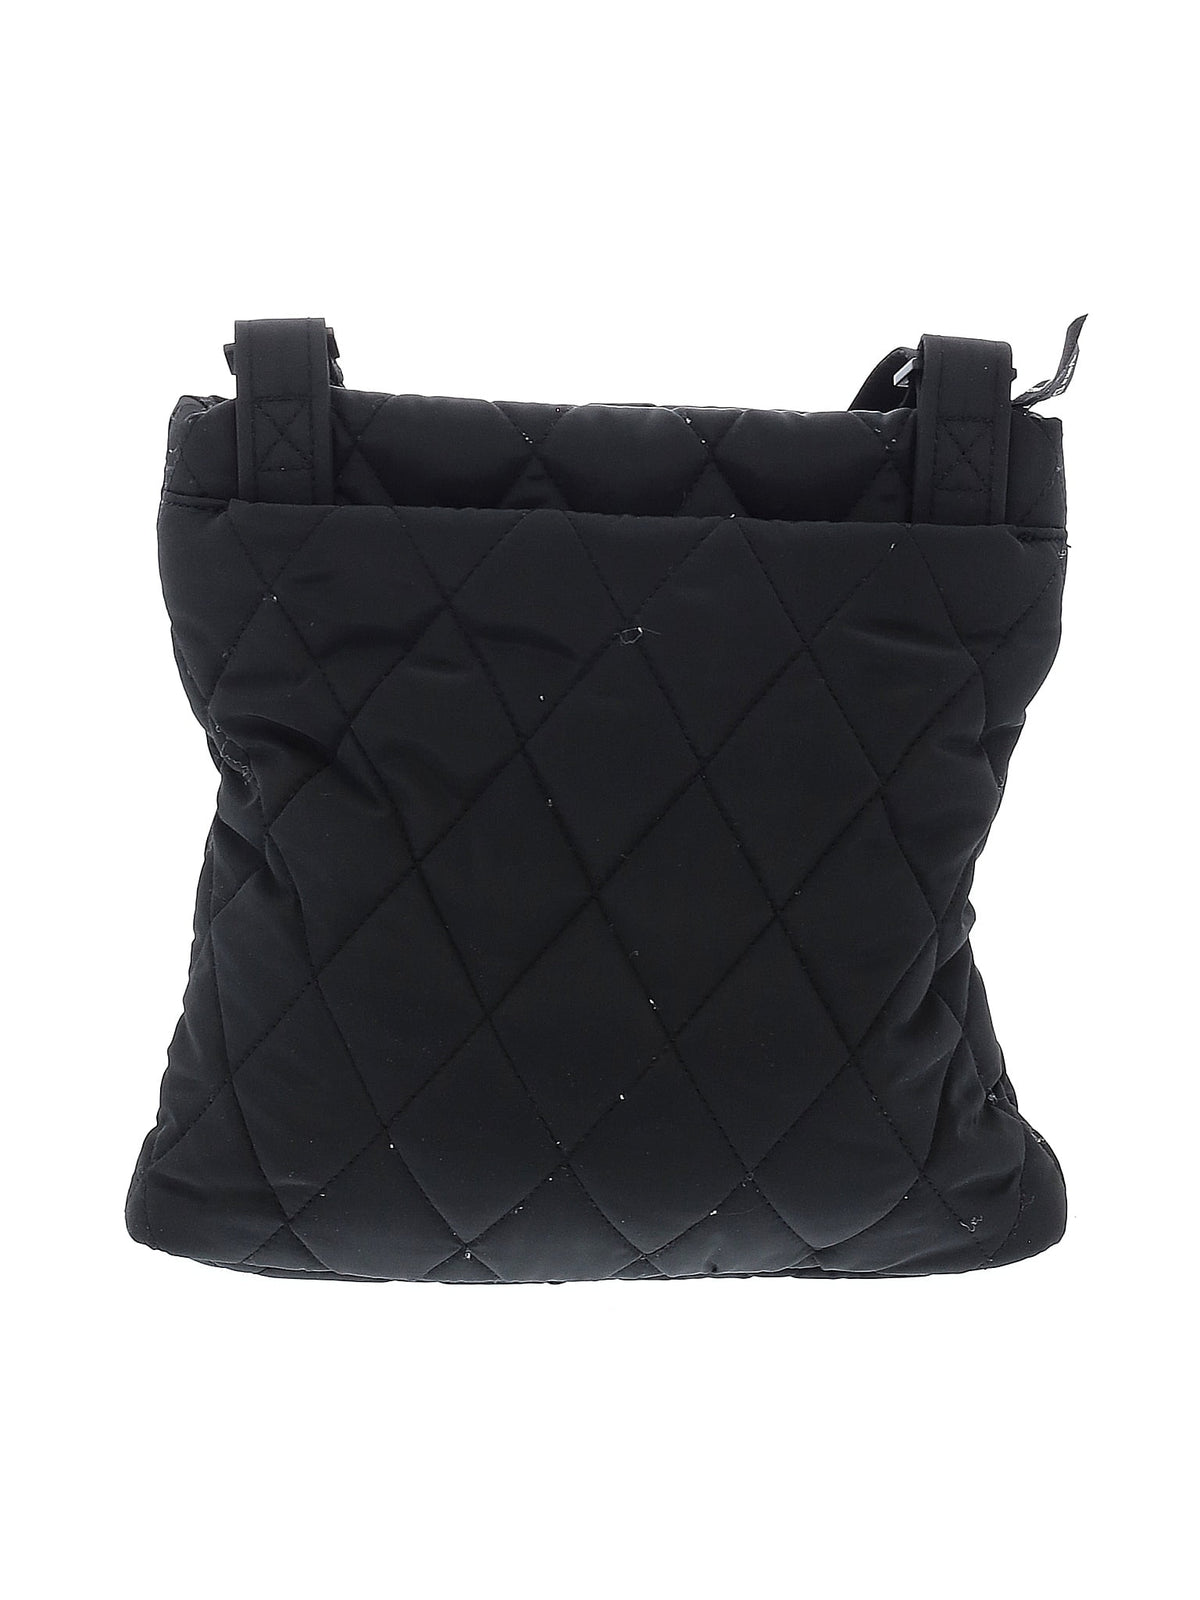 Crossbody Bag size - One Size